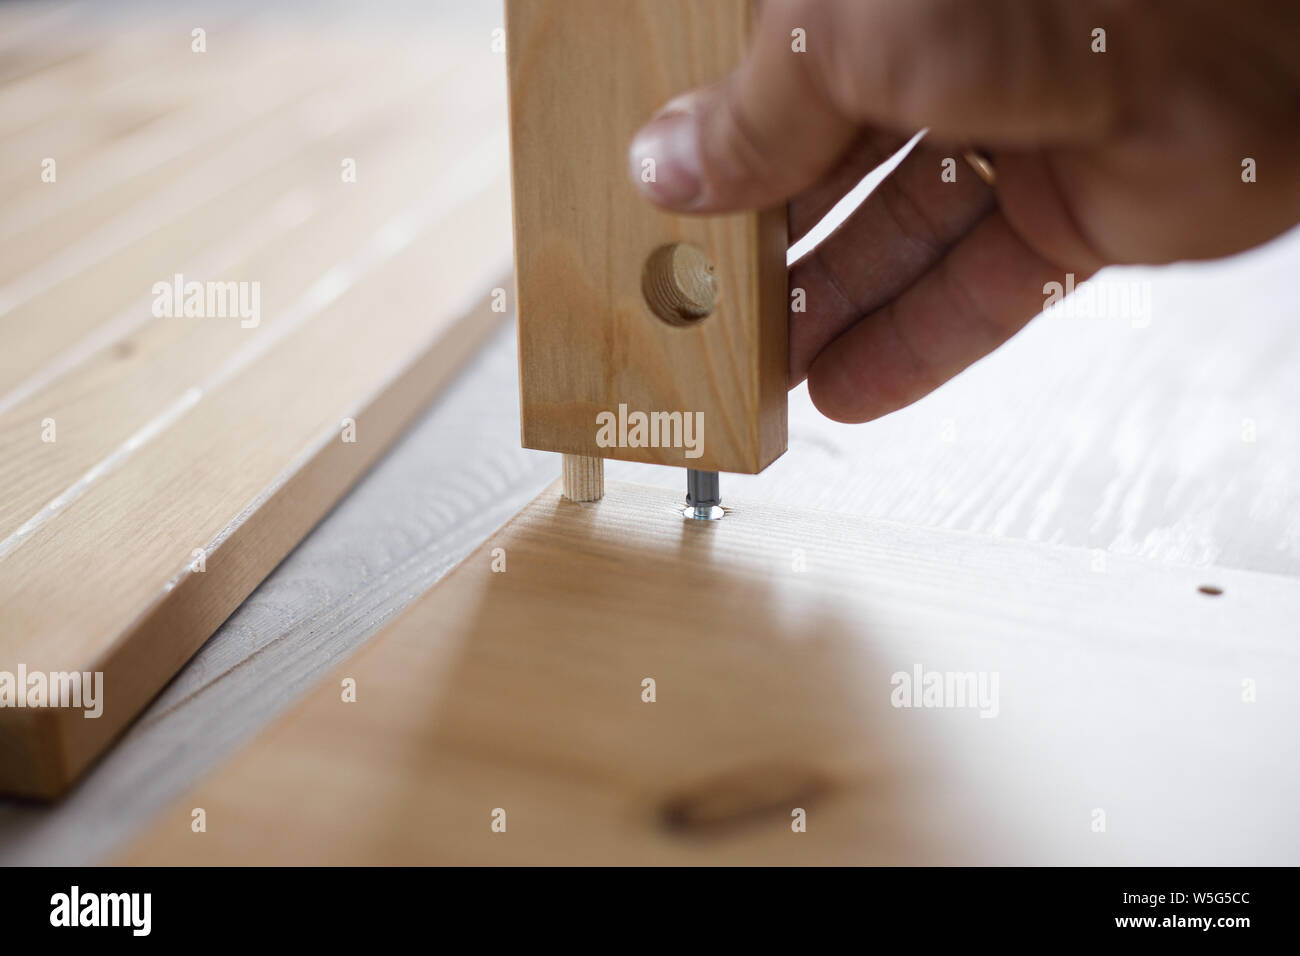 Man assembling wooden furniture at home, close up image. Stock Photo